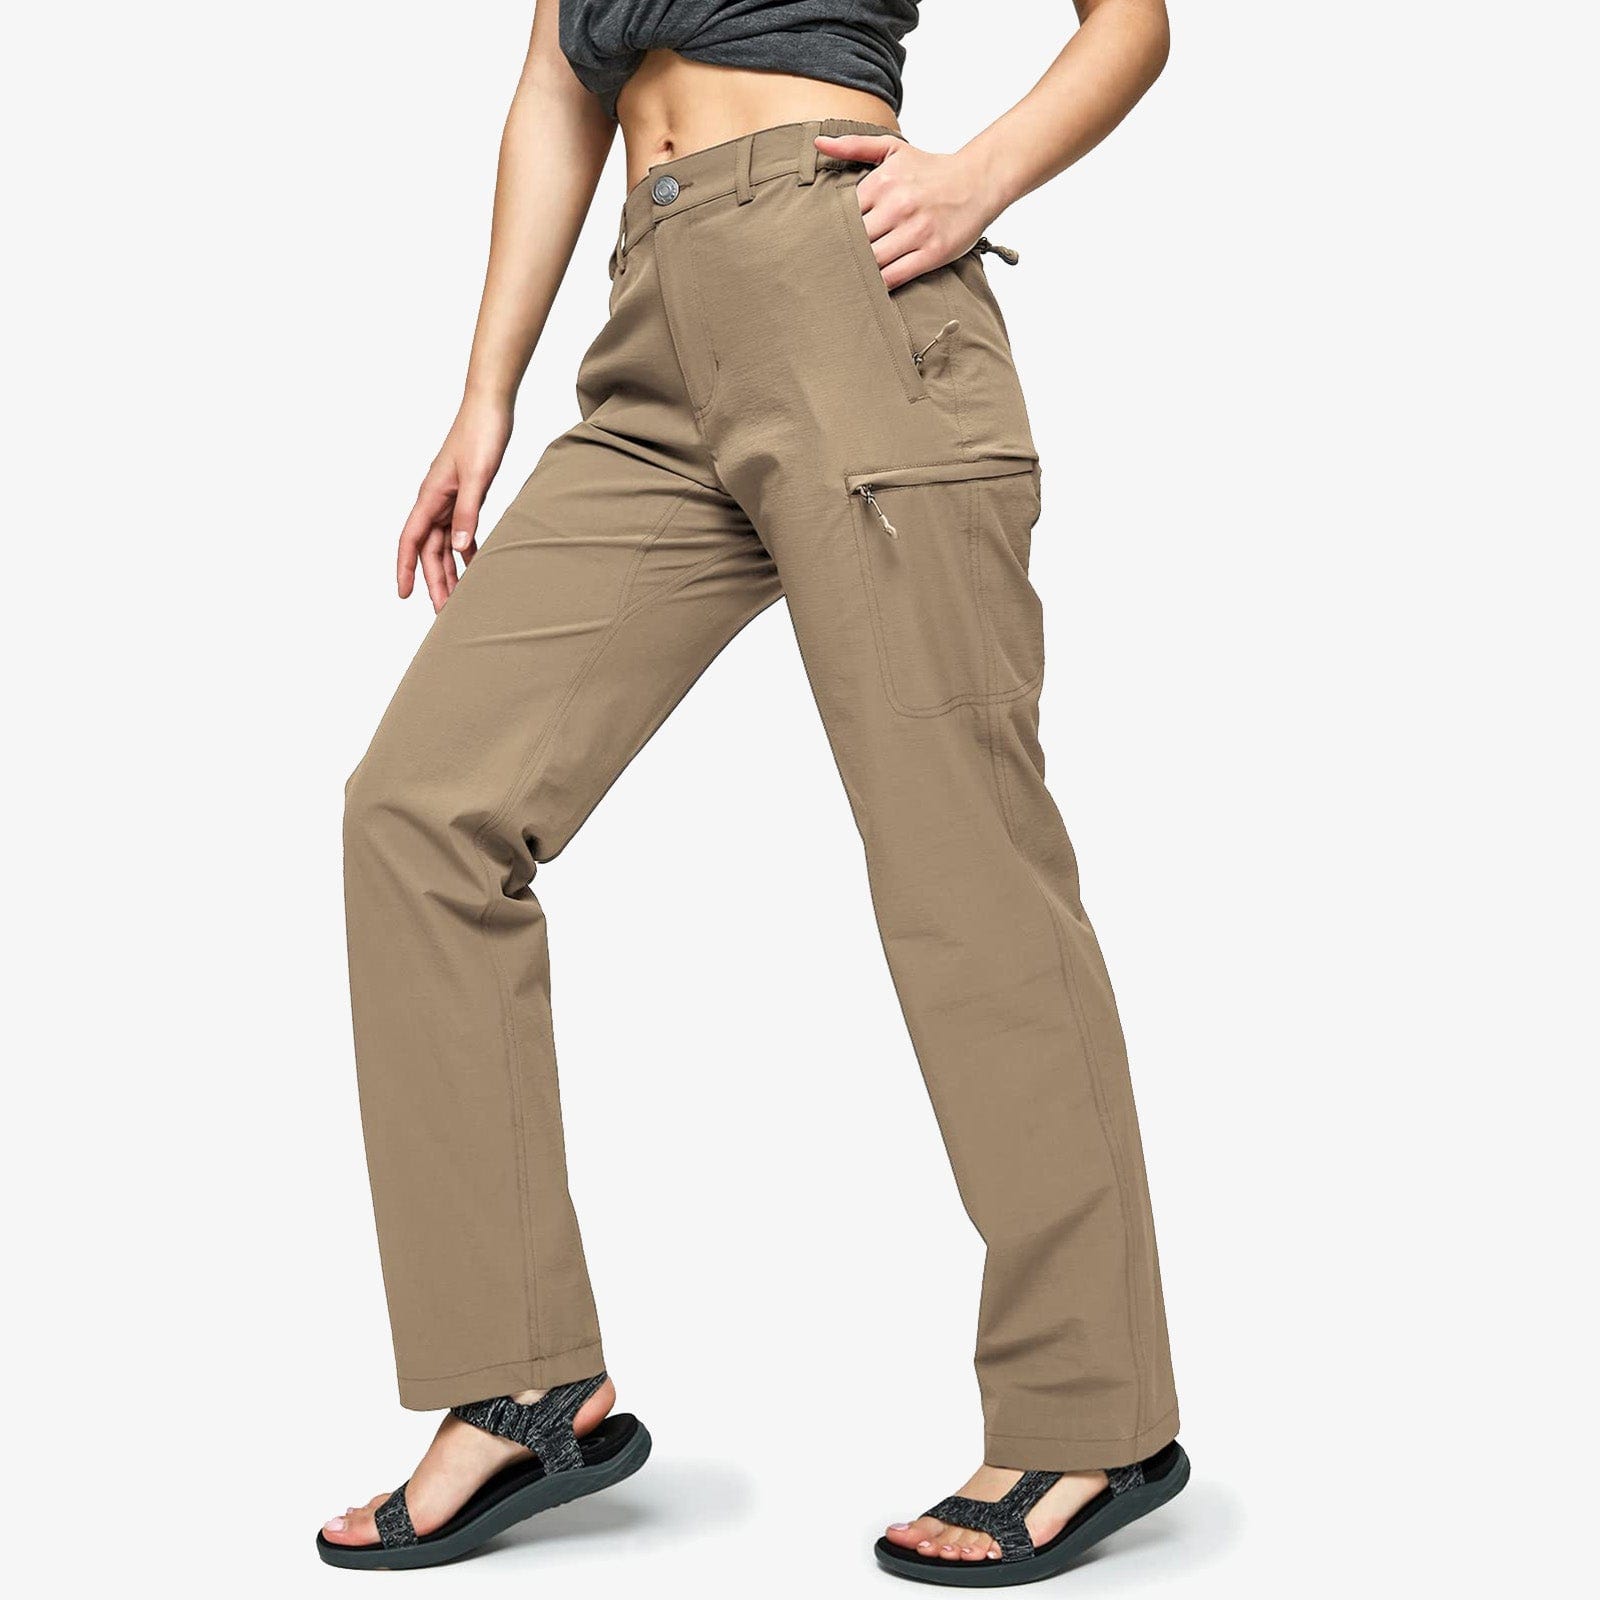 Mier Women's Quick Dry Cargo Pants Tactical Hiking Pants, Khaki / 14